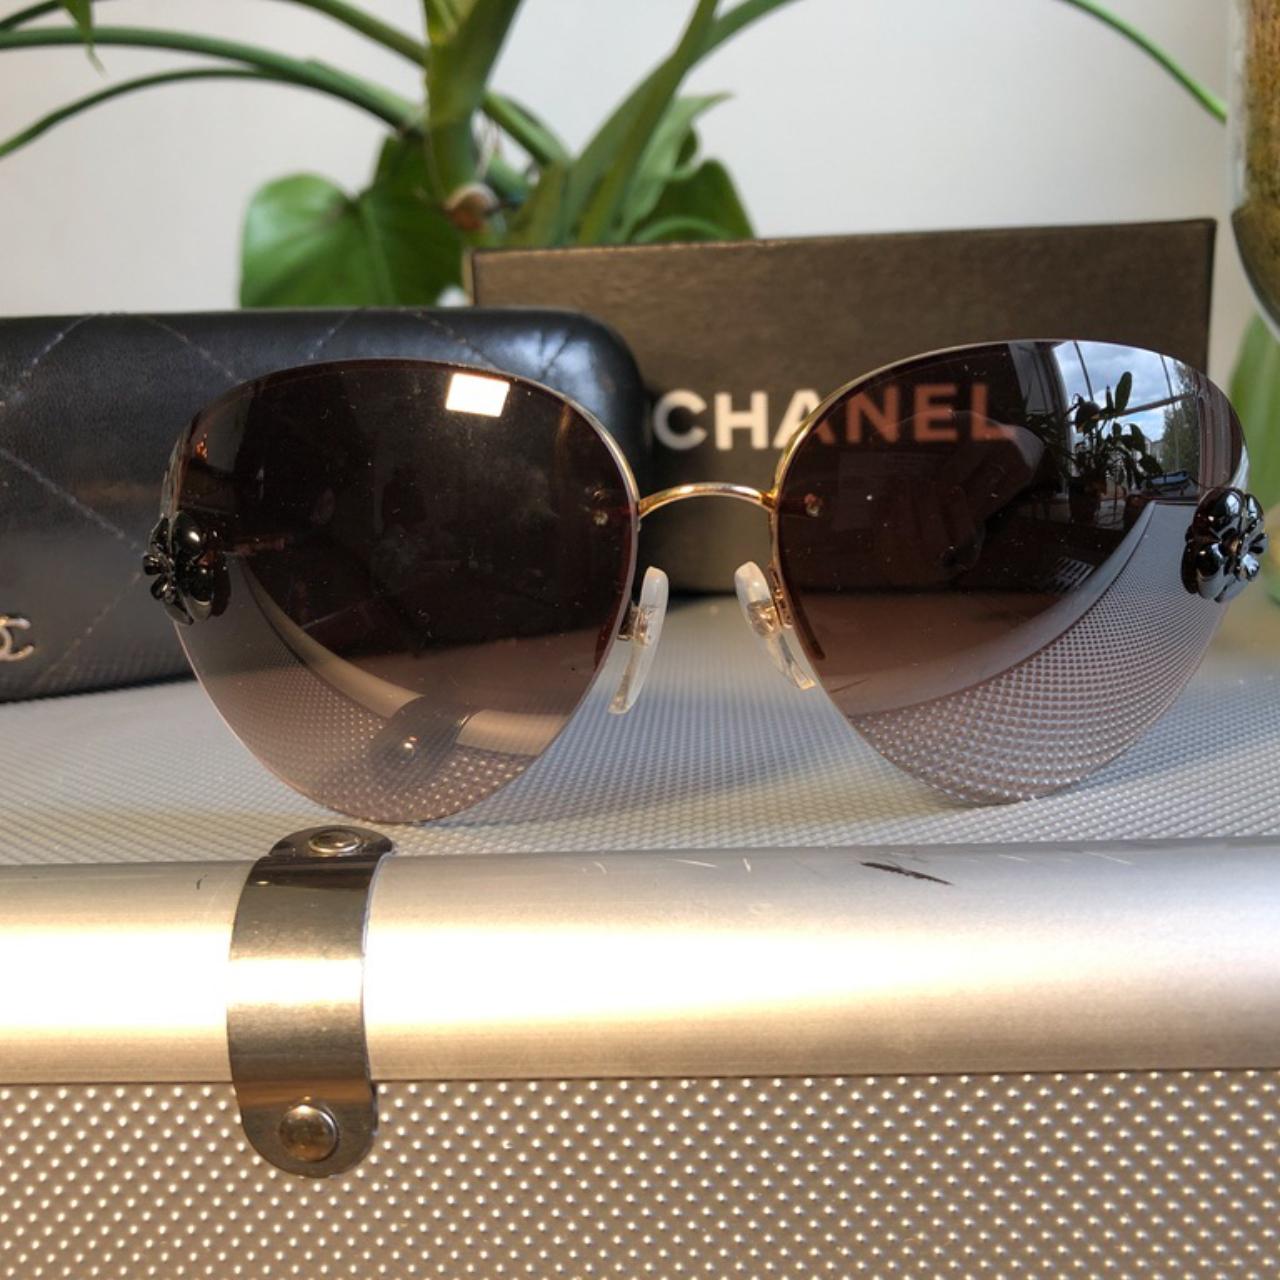 Chanel sunglasses silver clear black used eyewear negane lady's woman